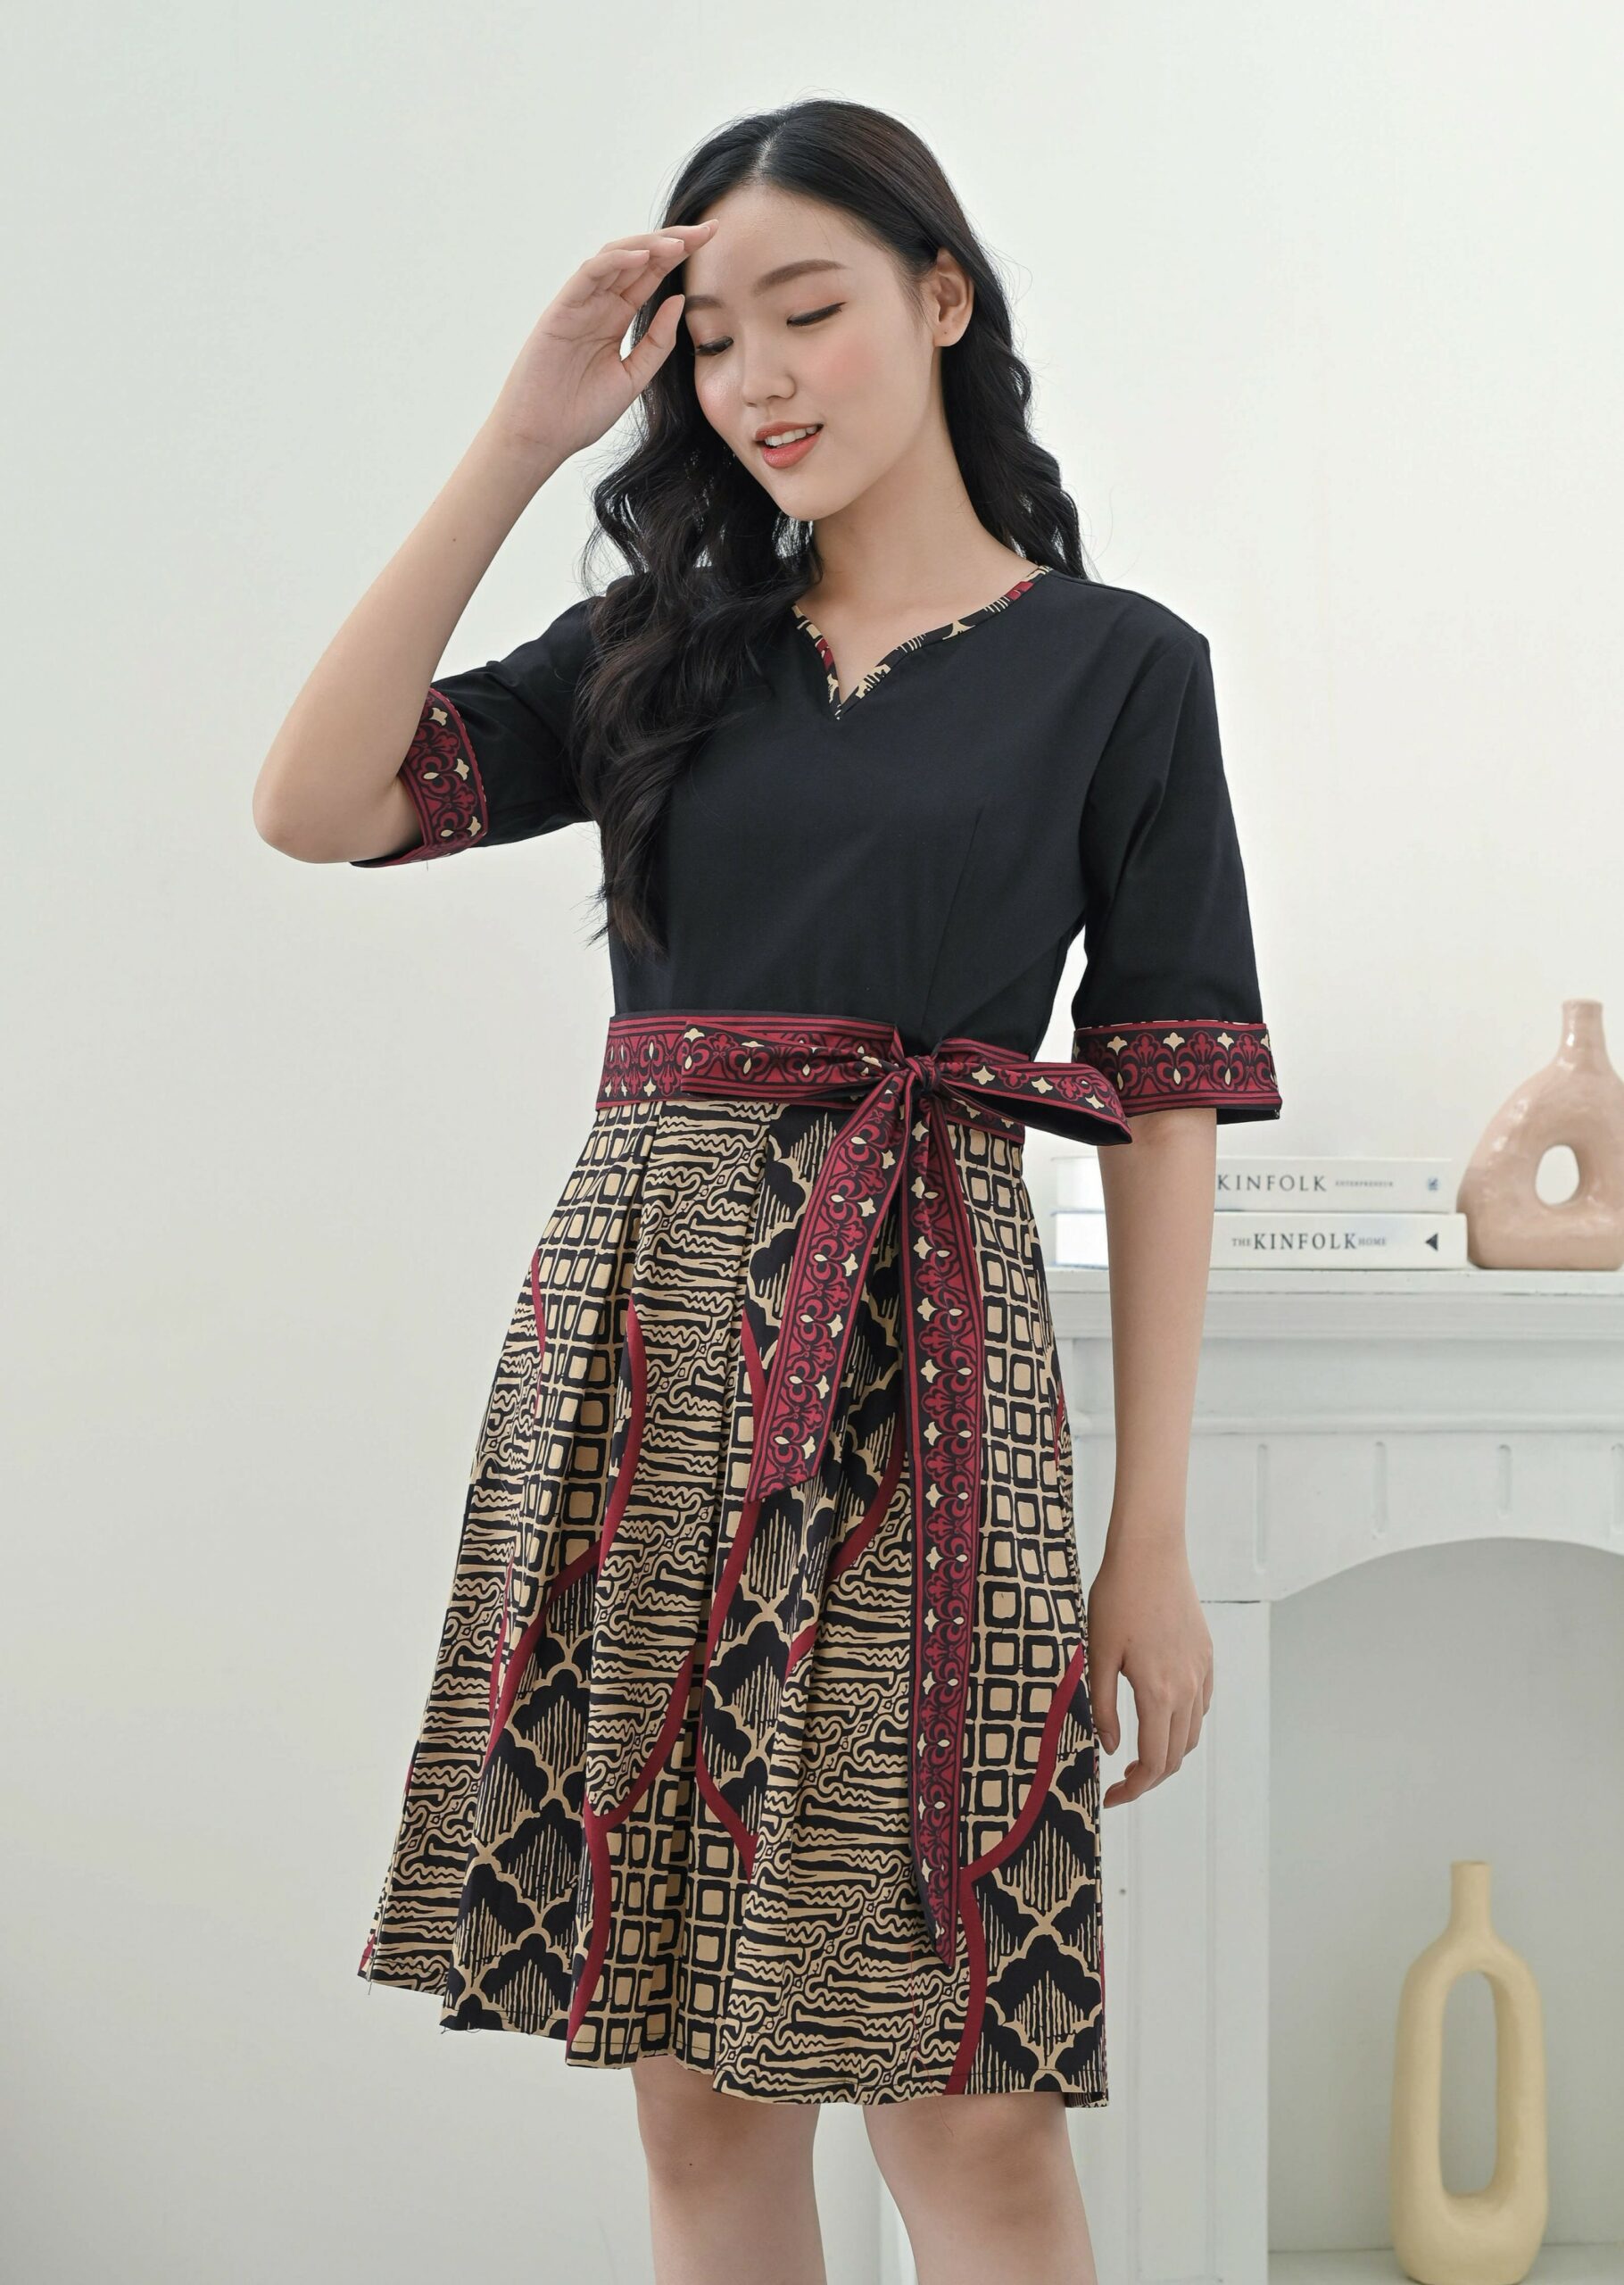 UJO - Florence Dress Batik Wanita / Dress Batik Selutut